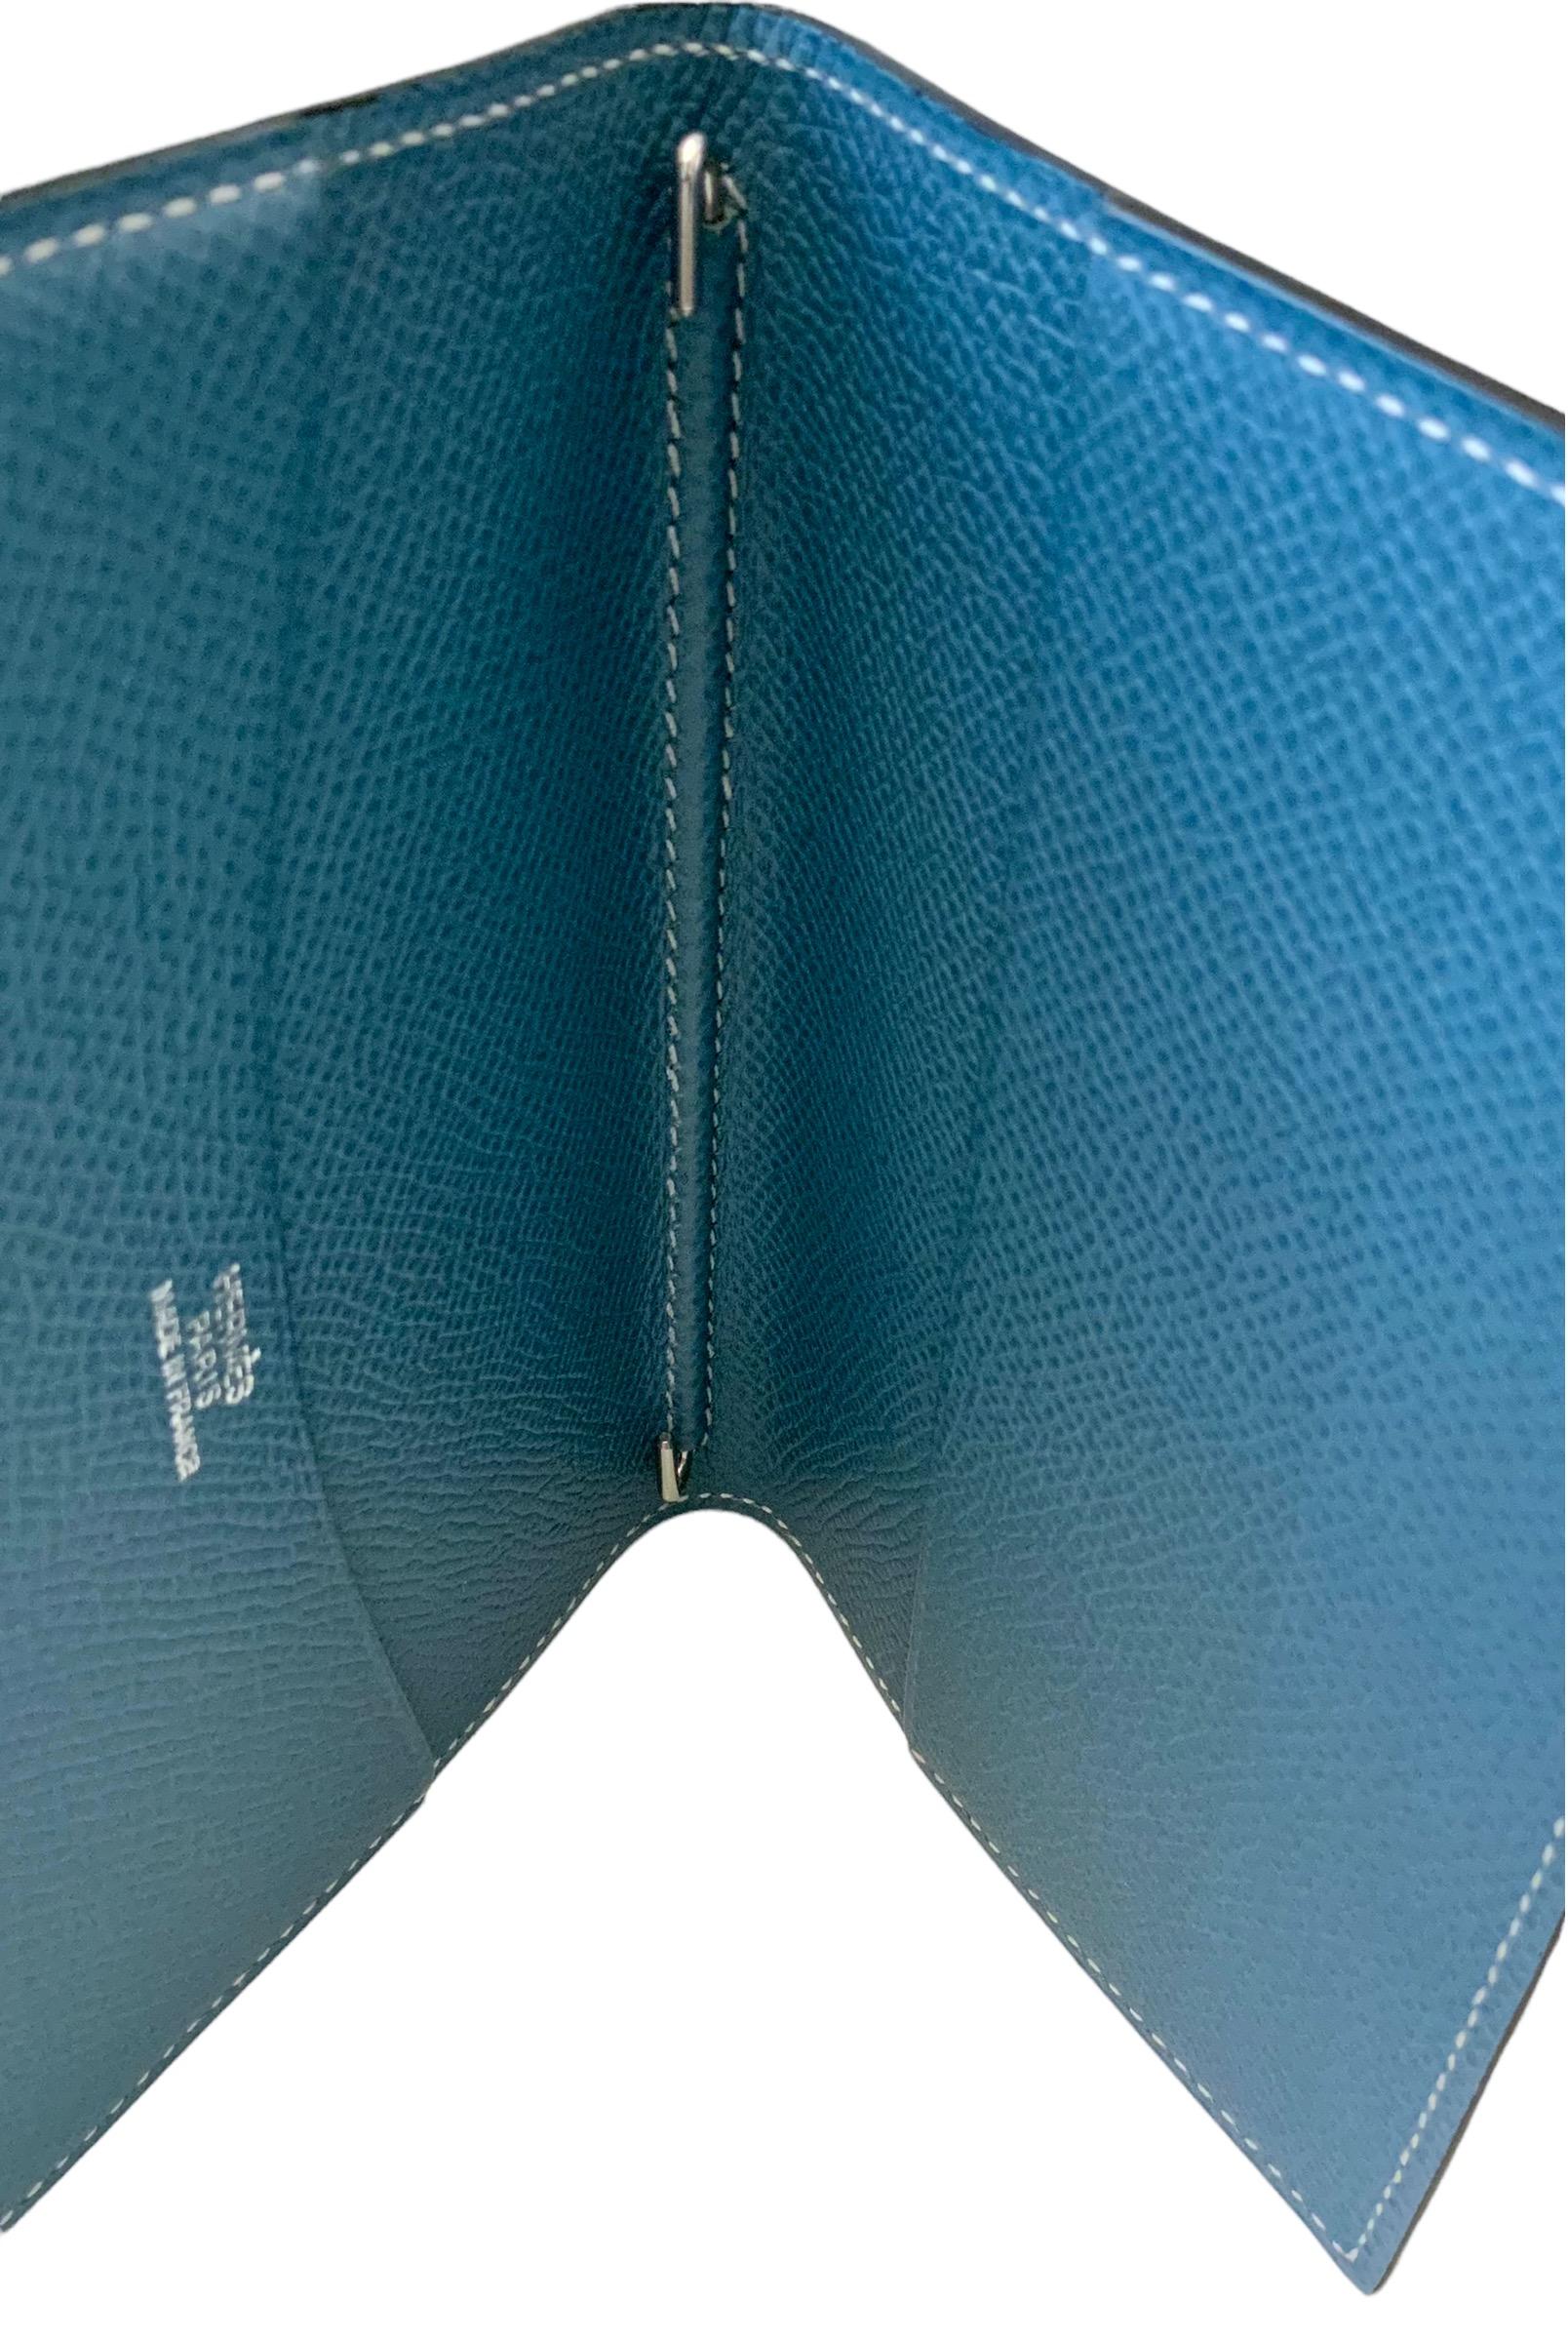 Women's or Men's Hermès Blue Epsom Leather Agenda Cover and CC Insert